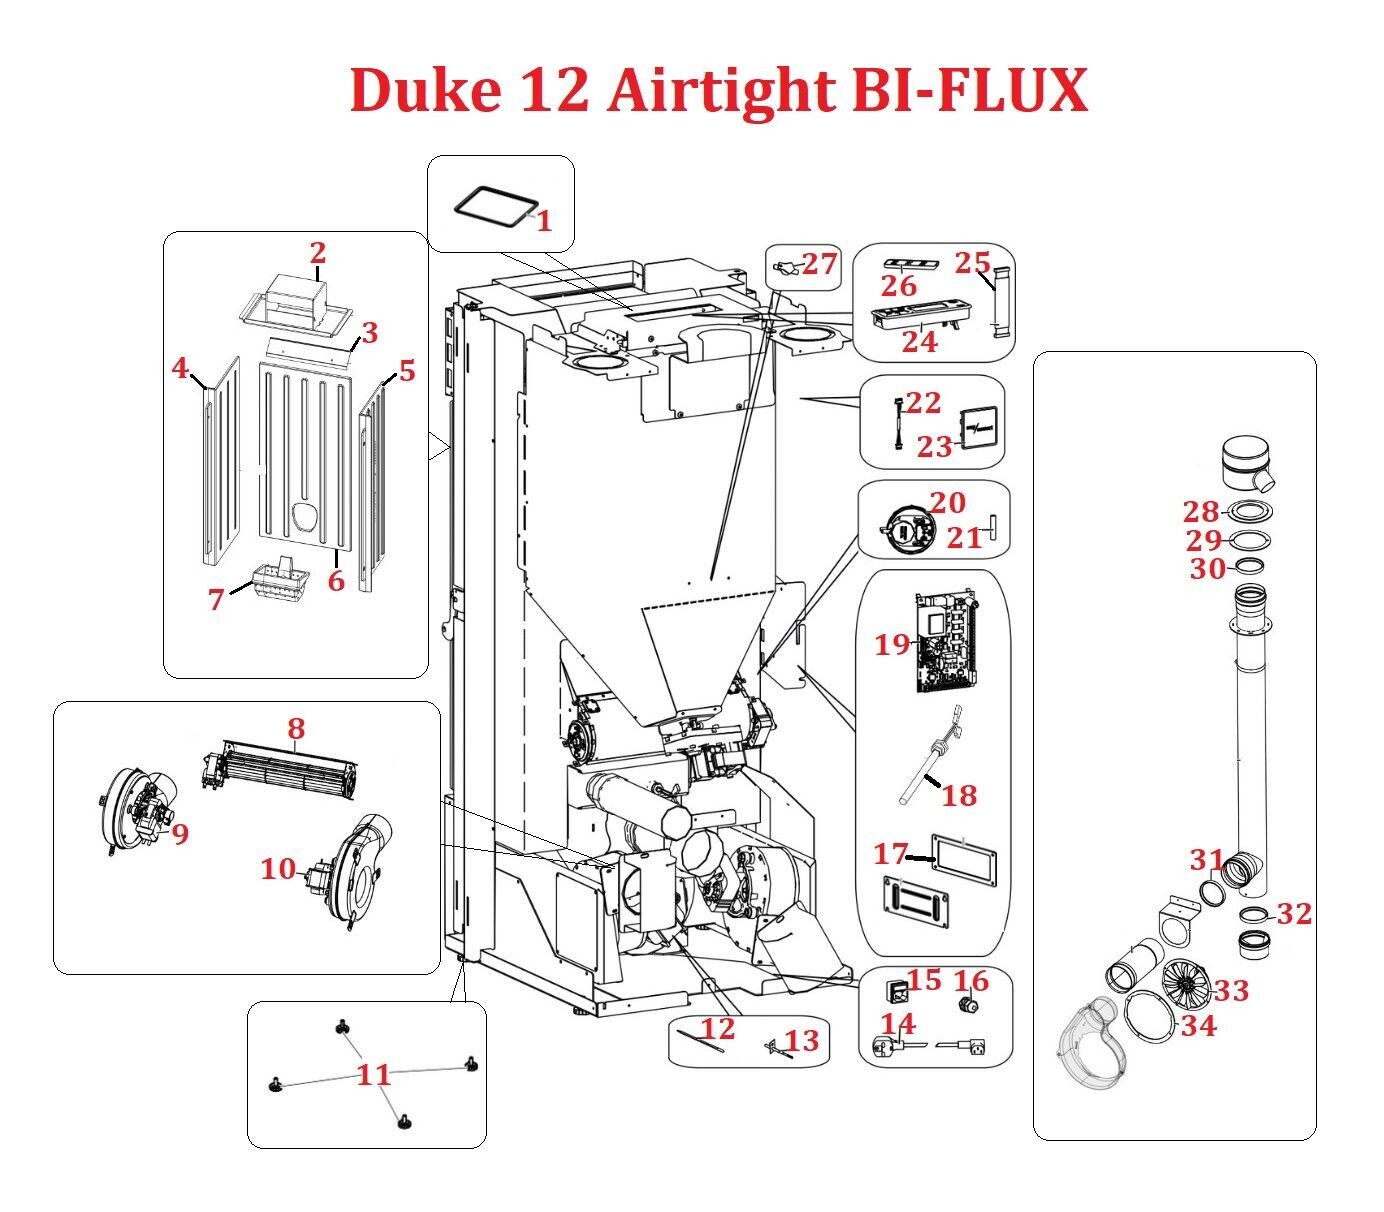 Duke 12 Airtight BI-FLUX